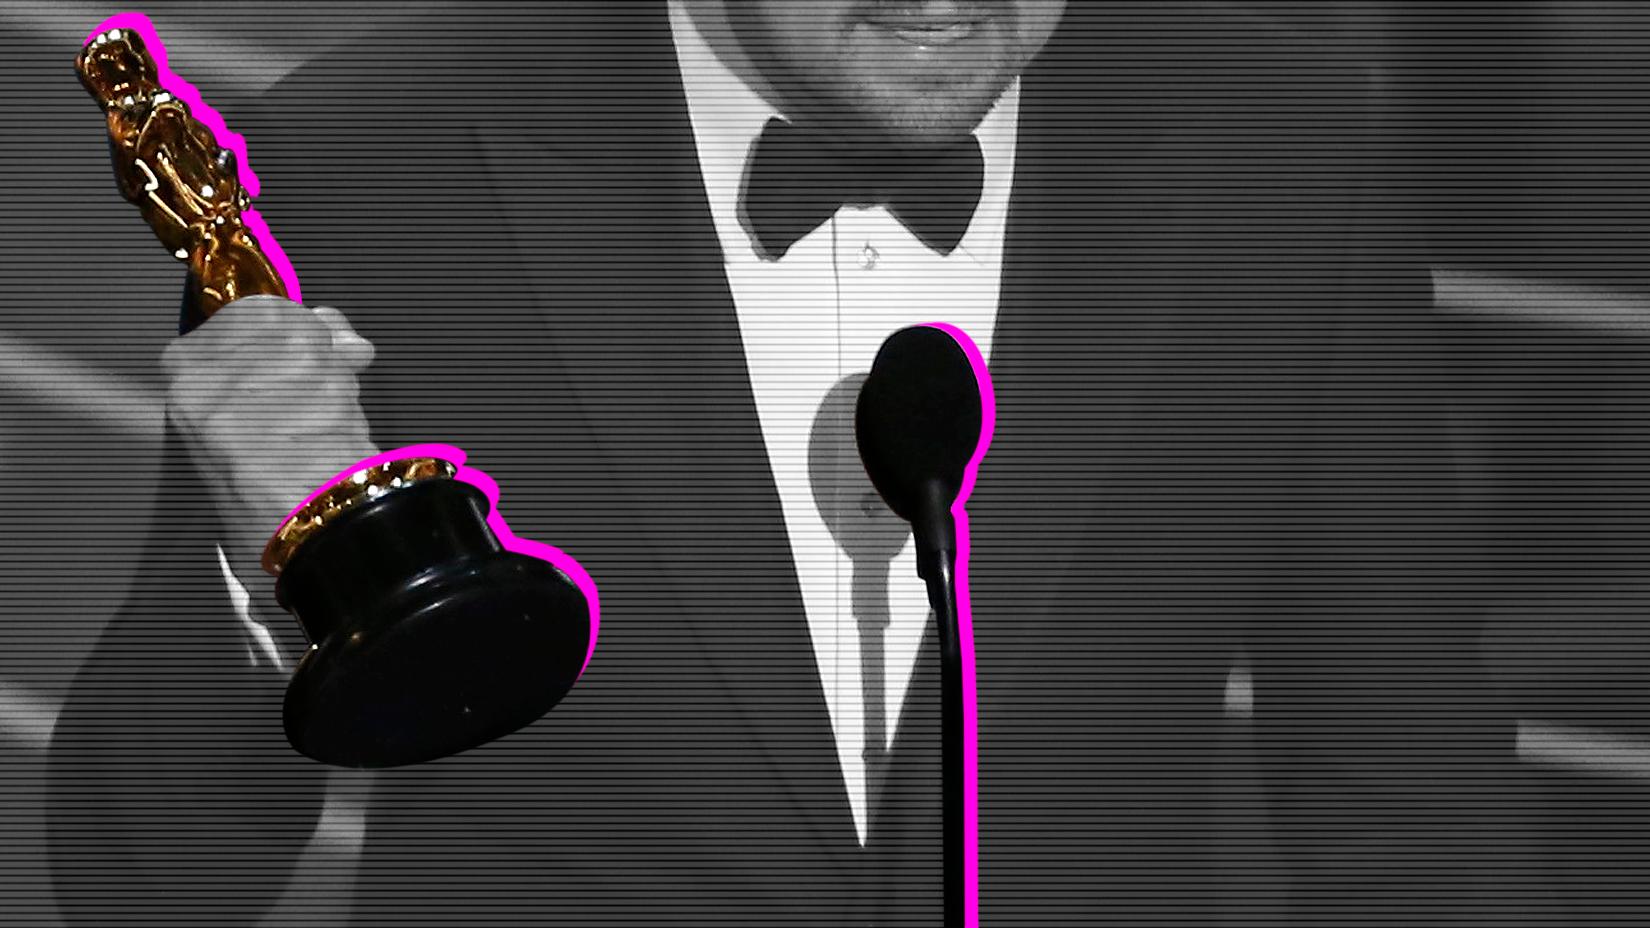 Leonardo DiCaprio wins Best Actor at the 2016 Oscars.